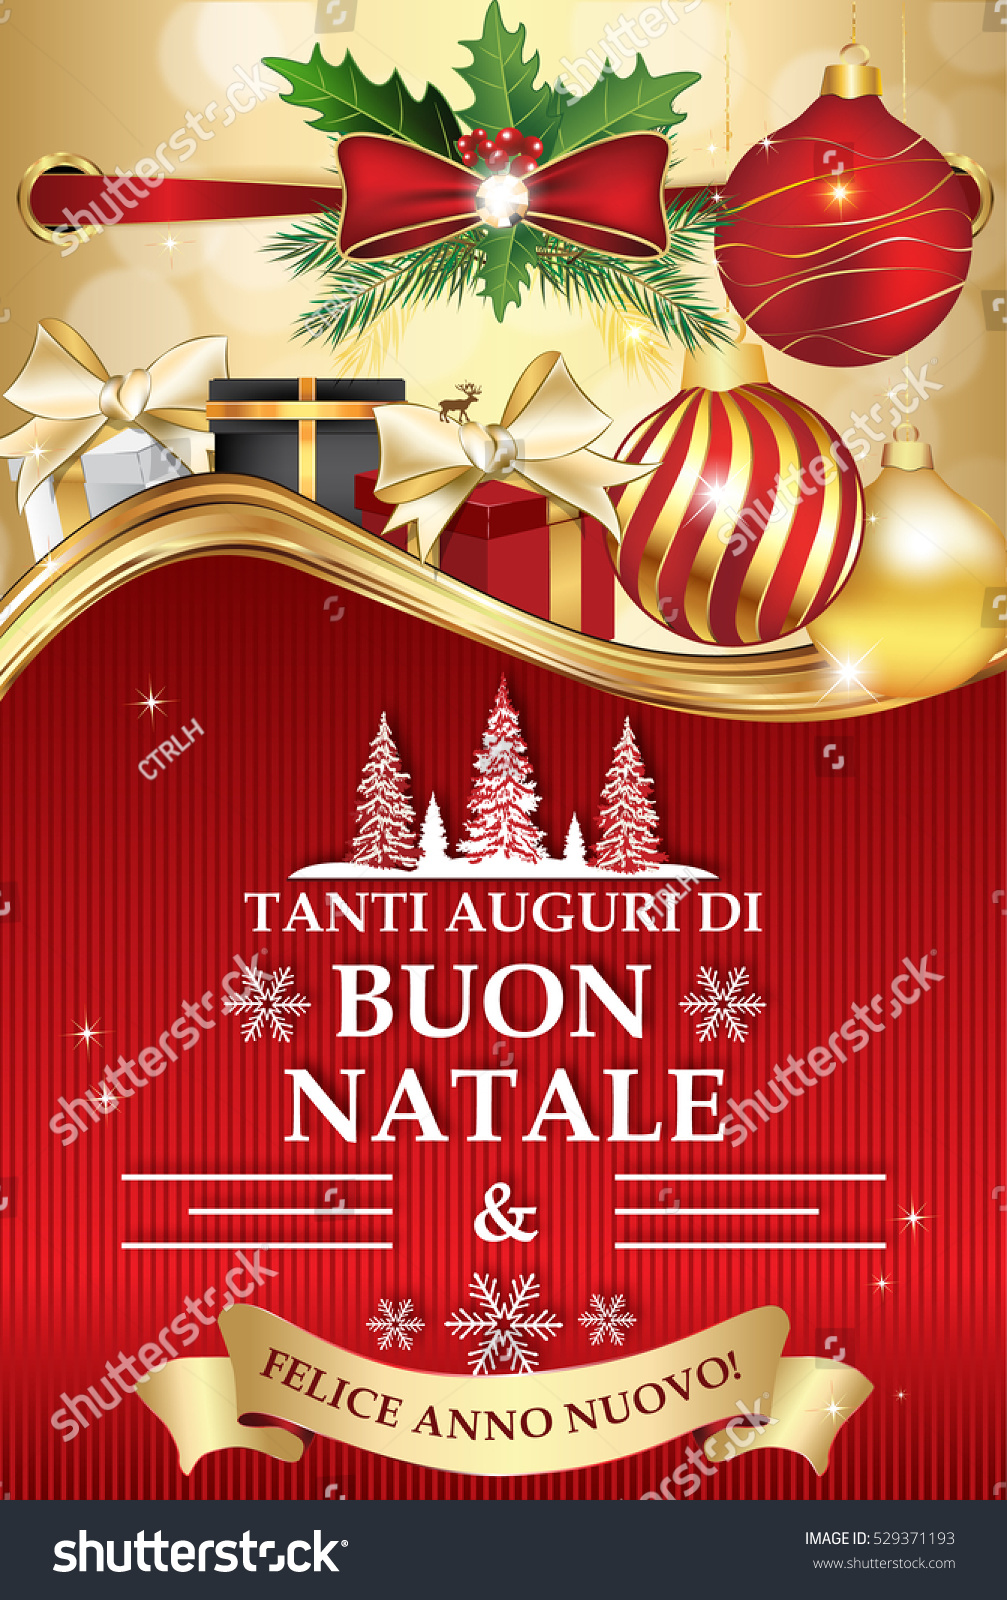 Buon Natale Happy New Year.Italian Greeting Card Winter Holiday Merry Stock Illustration 529371193